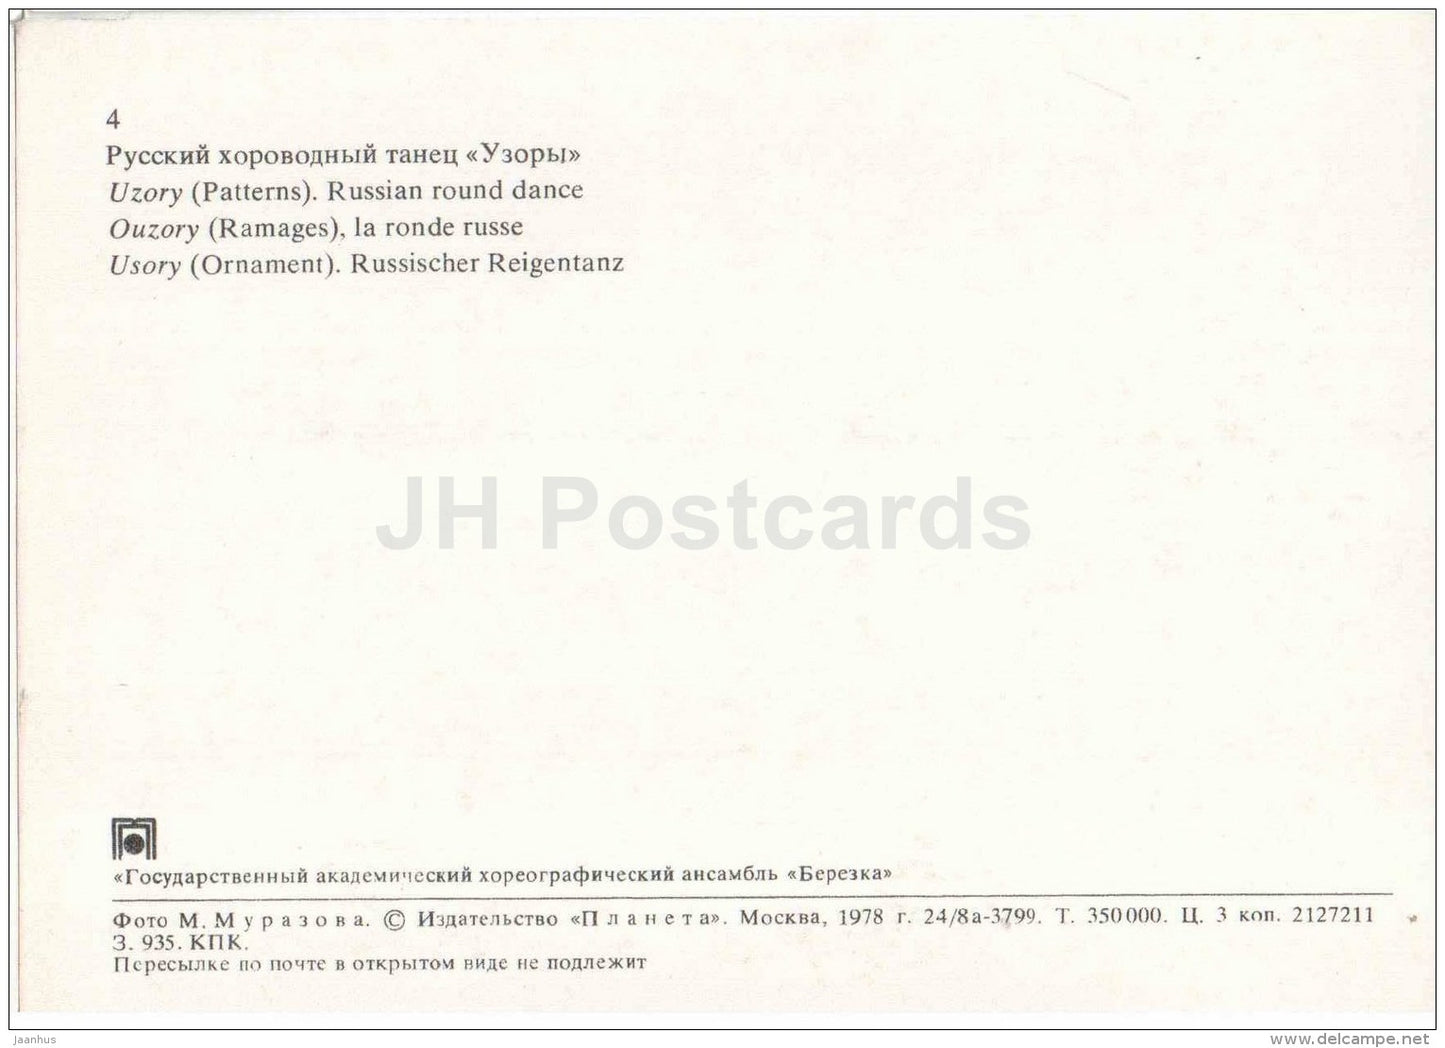 Uzory (Patterns) , russian round dance - State Academic Choreographic Ensemble Berezka - Russia USSR - 1978 - unused - JH Postcards